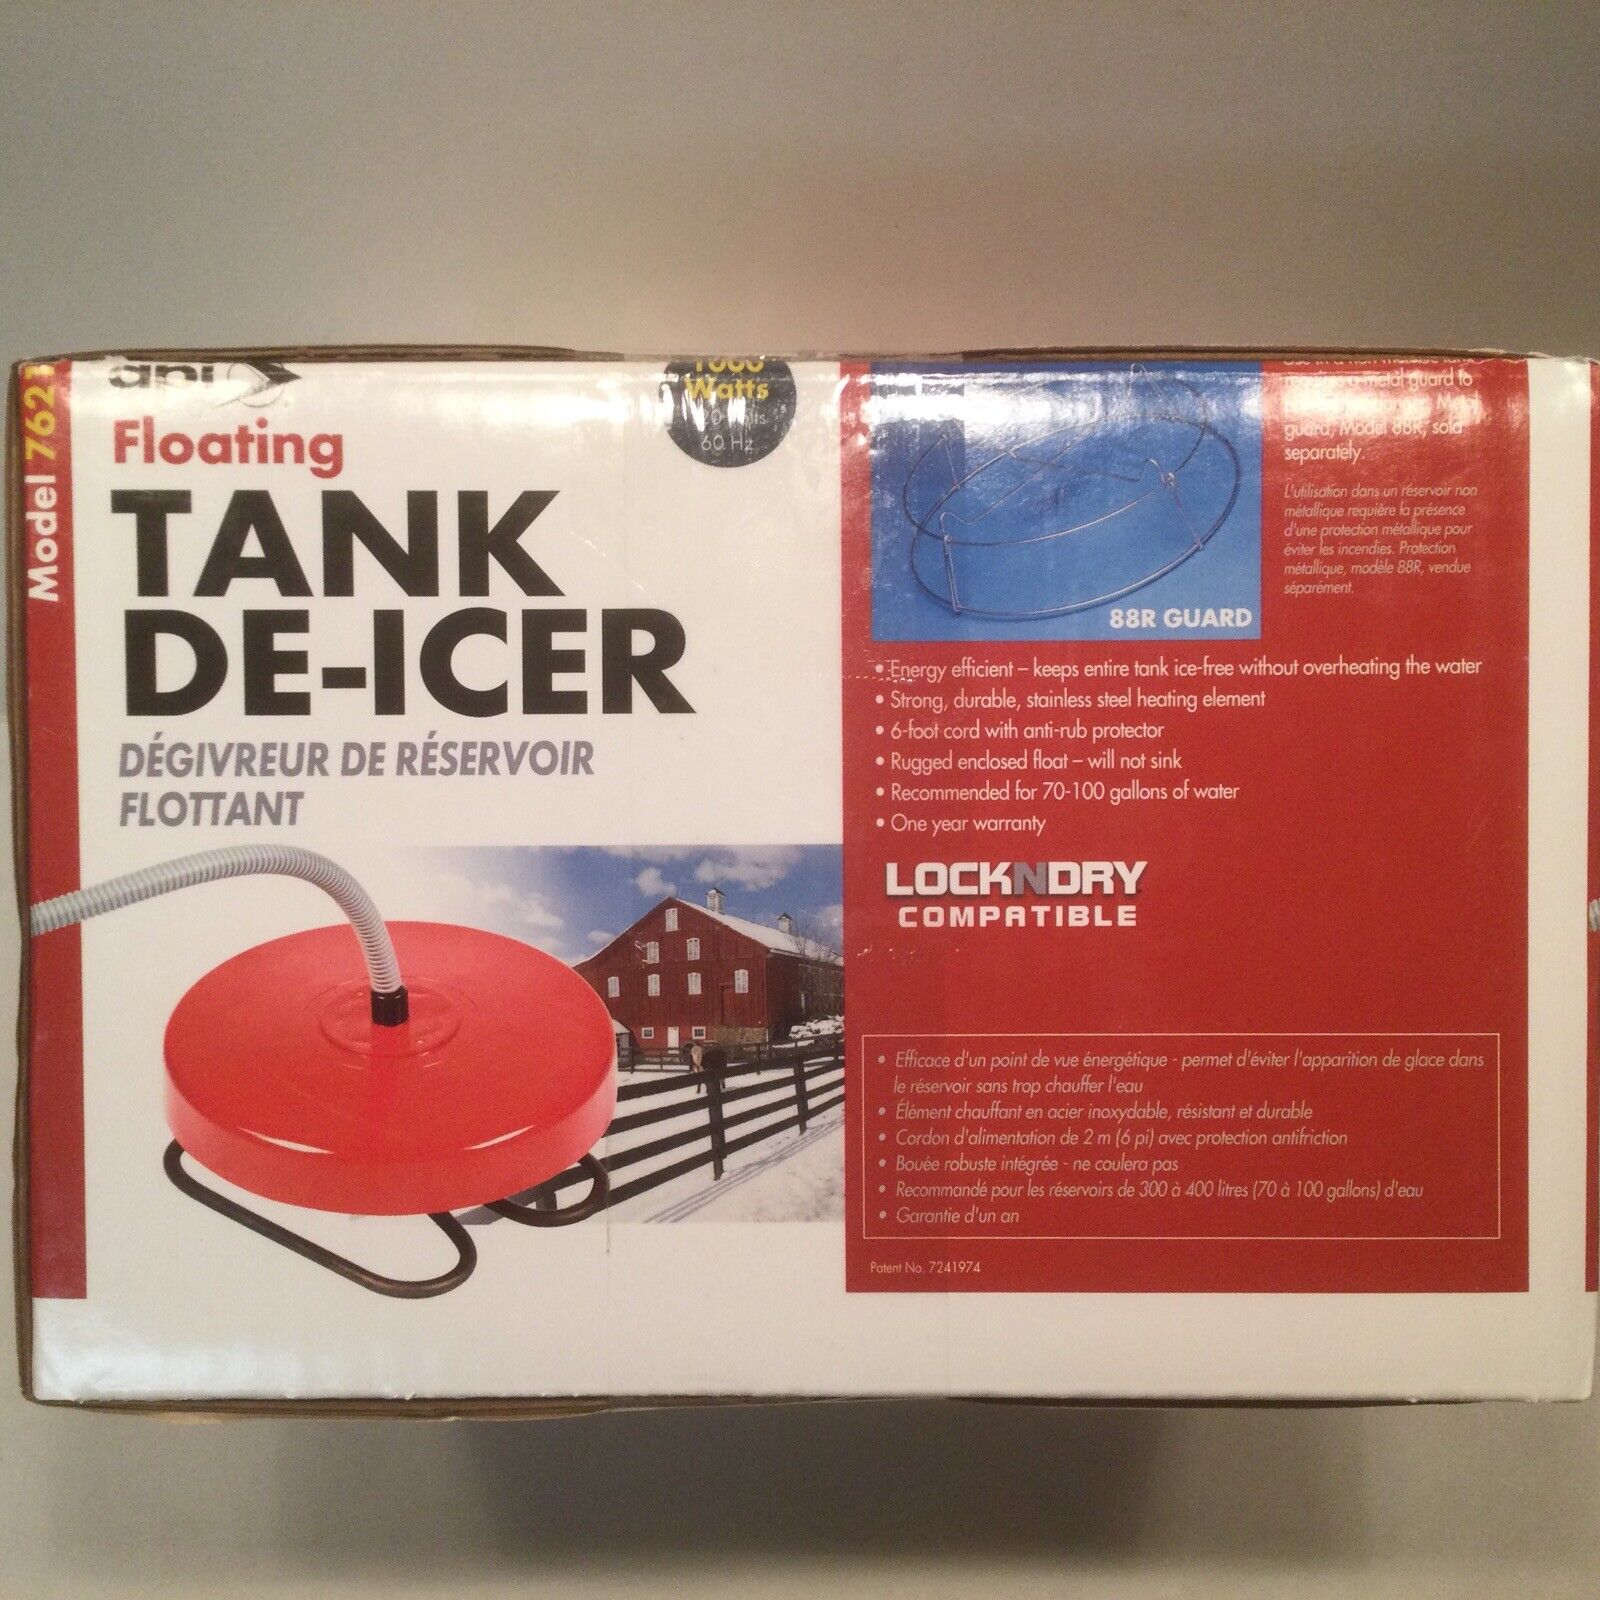 Api Floating Tank De-icer #7621 120v +1000 Watt Stock Tank Lockndry Compatible